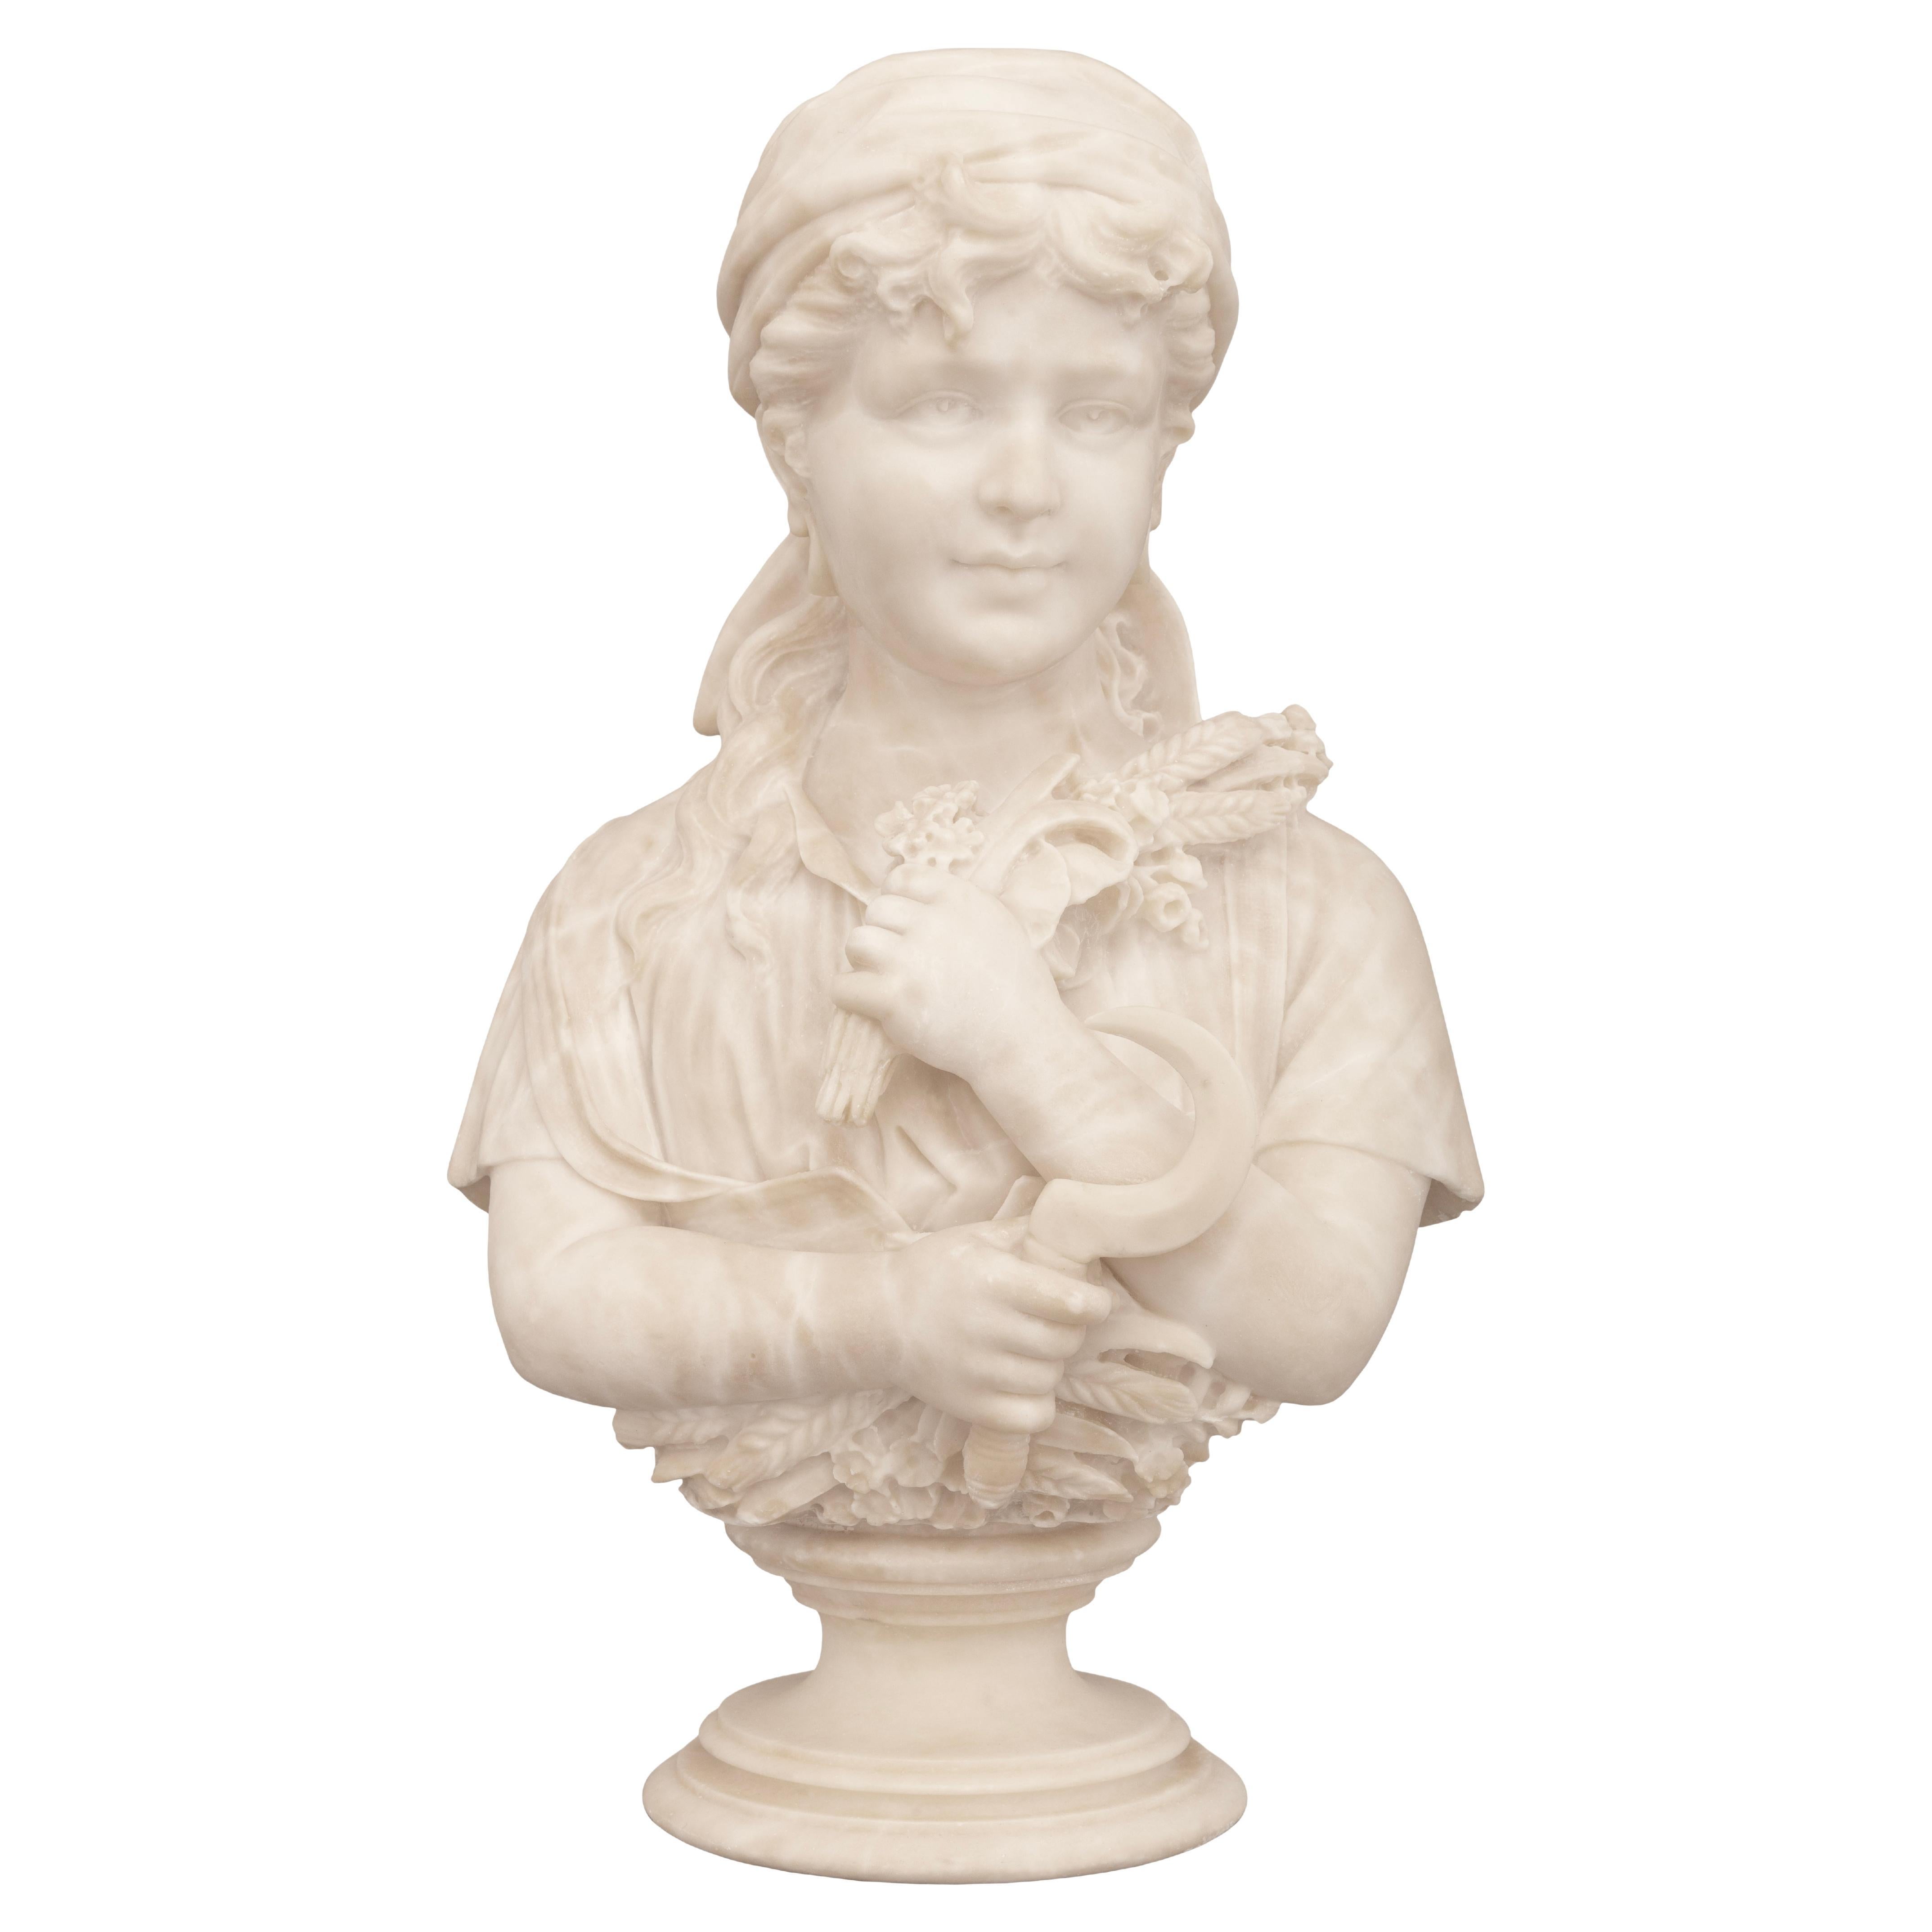 Italian 19th century white Carrara marble bust